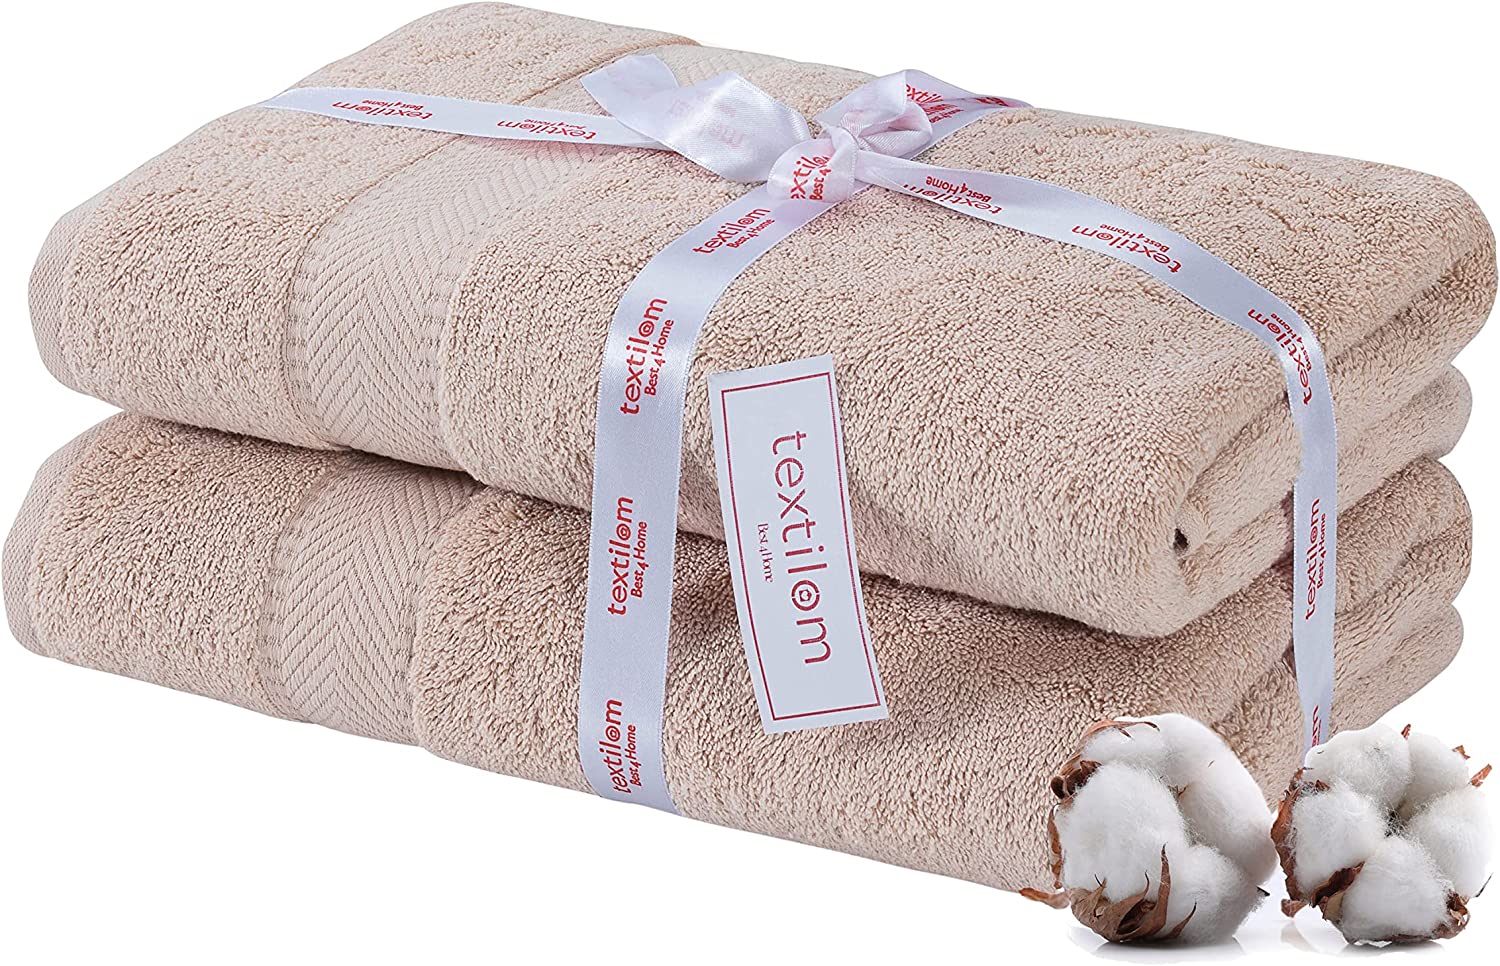 Textilom 100% Turkish Cotton Oversized Luxury Bath Sheets